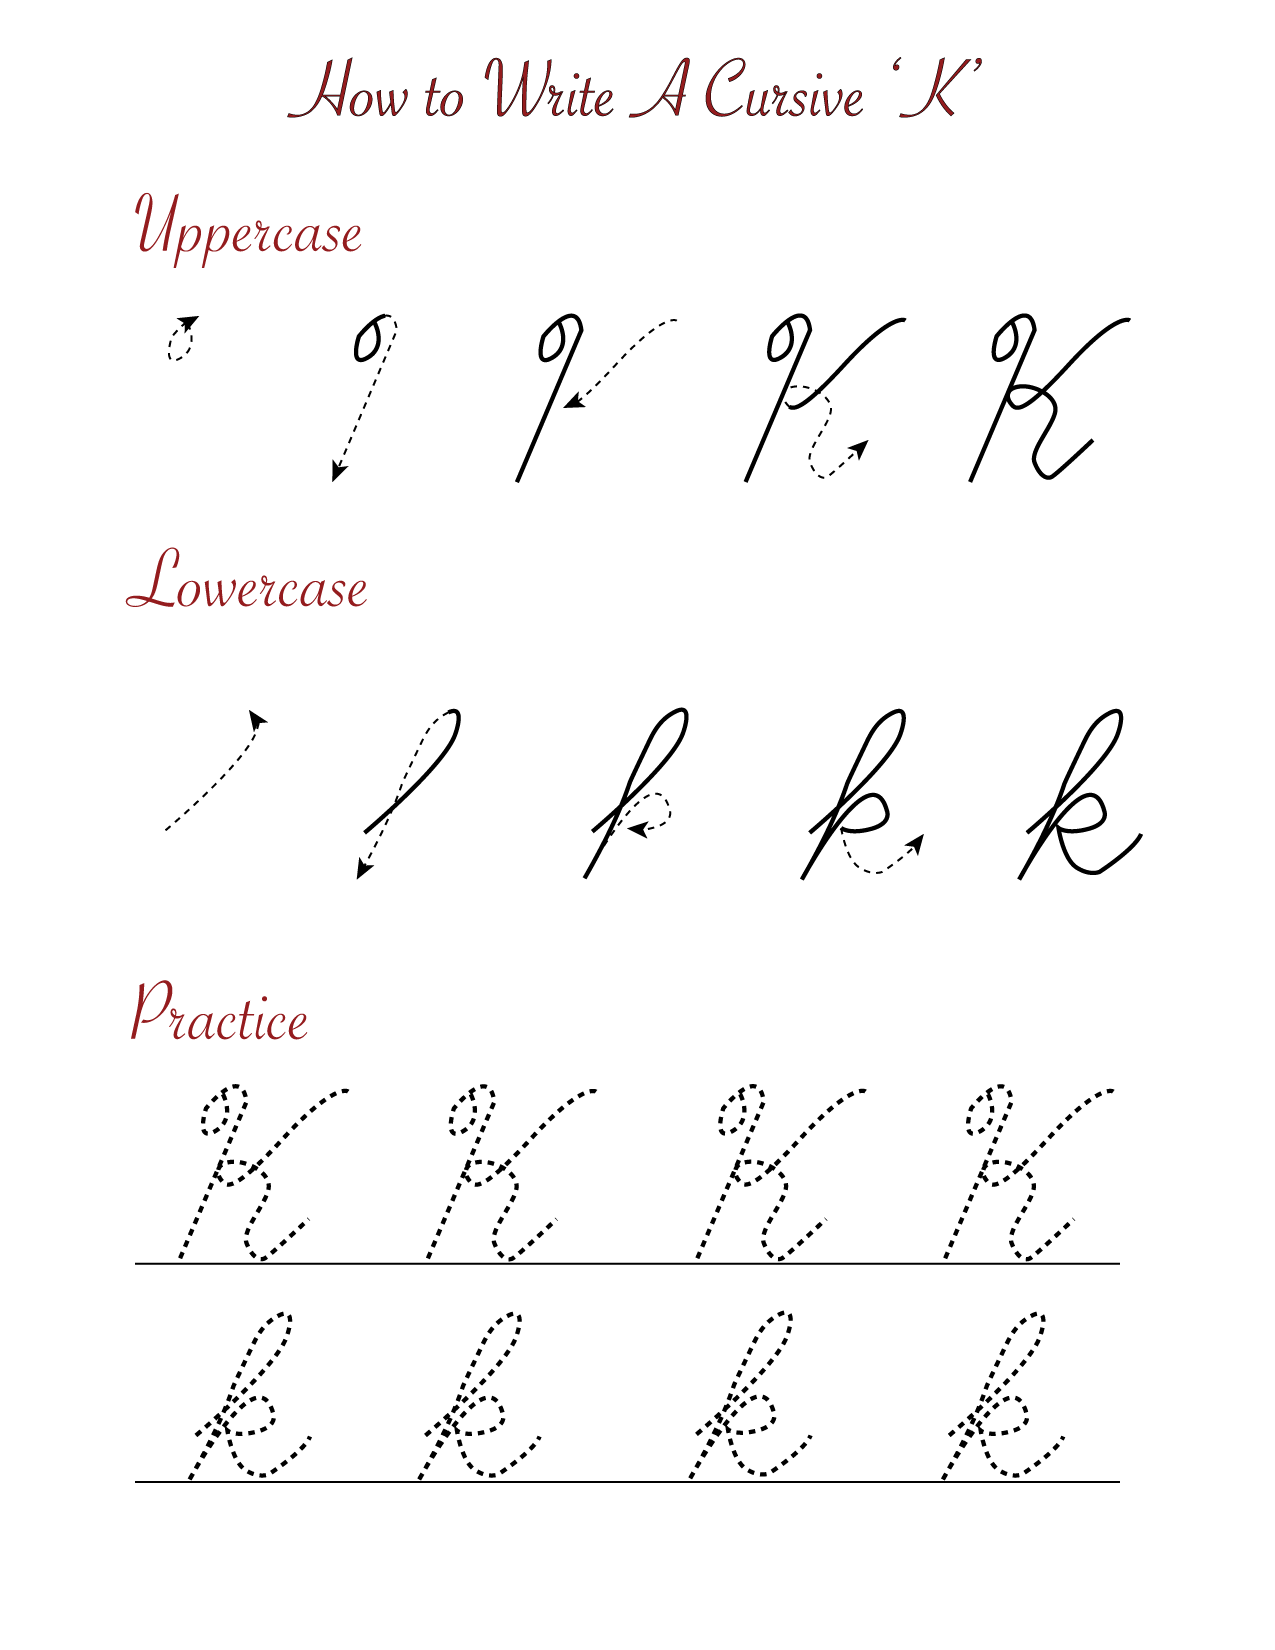 How to write a cursive 'K'